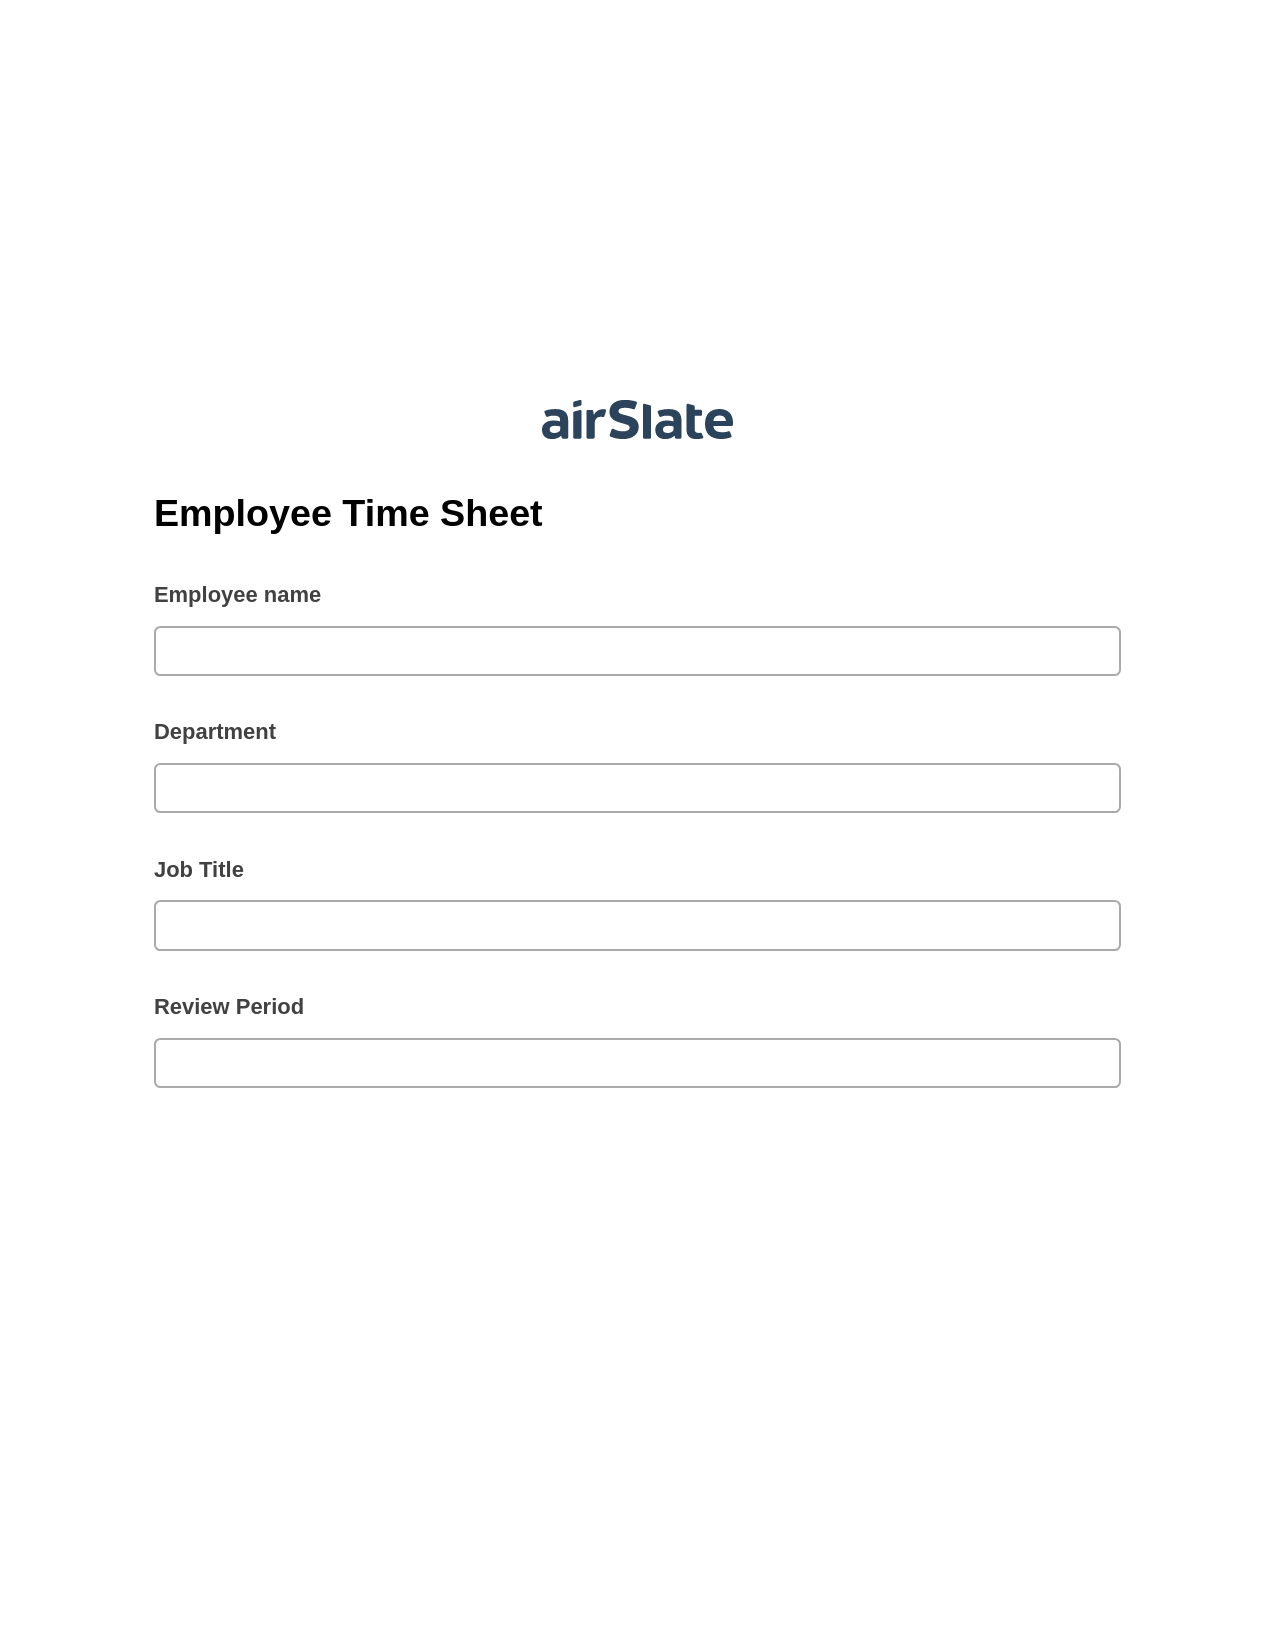 Employee Time Sheet Pre-fill from MySQL Bot, Create slate addon, Archive to Dropbox Bot